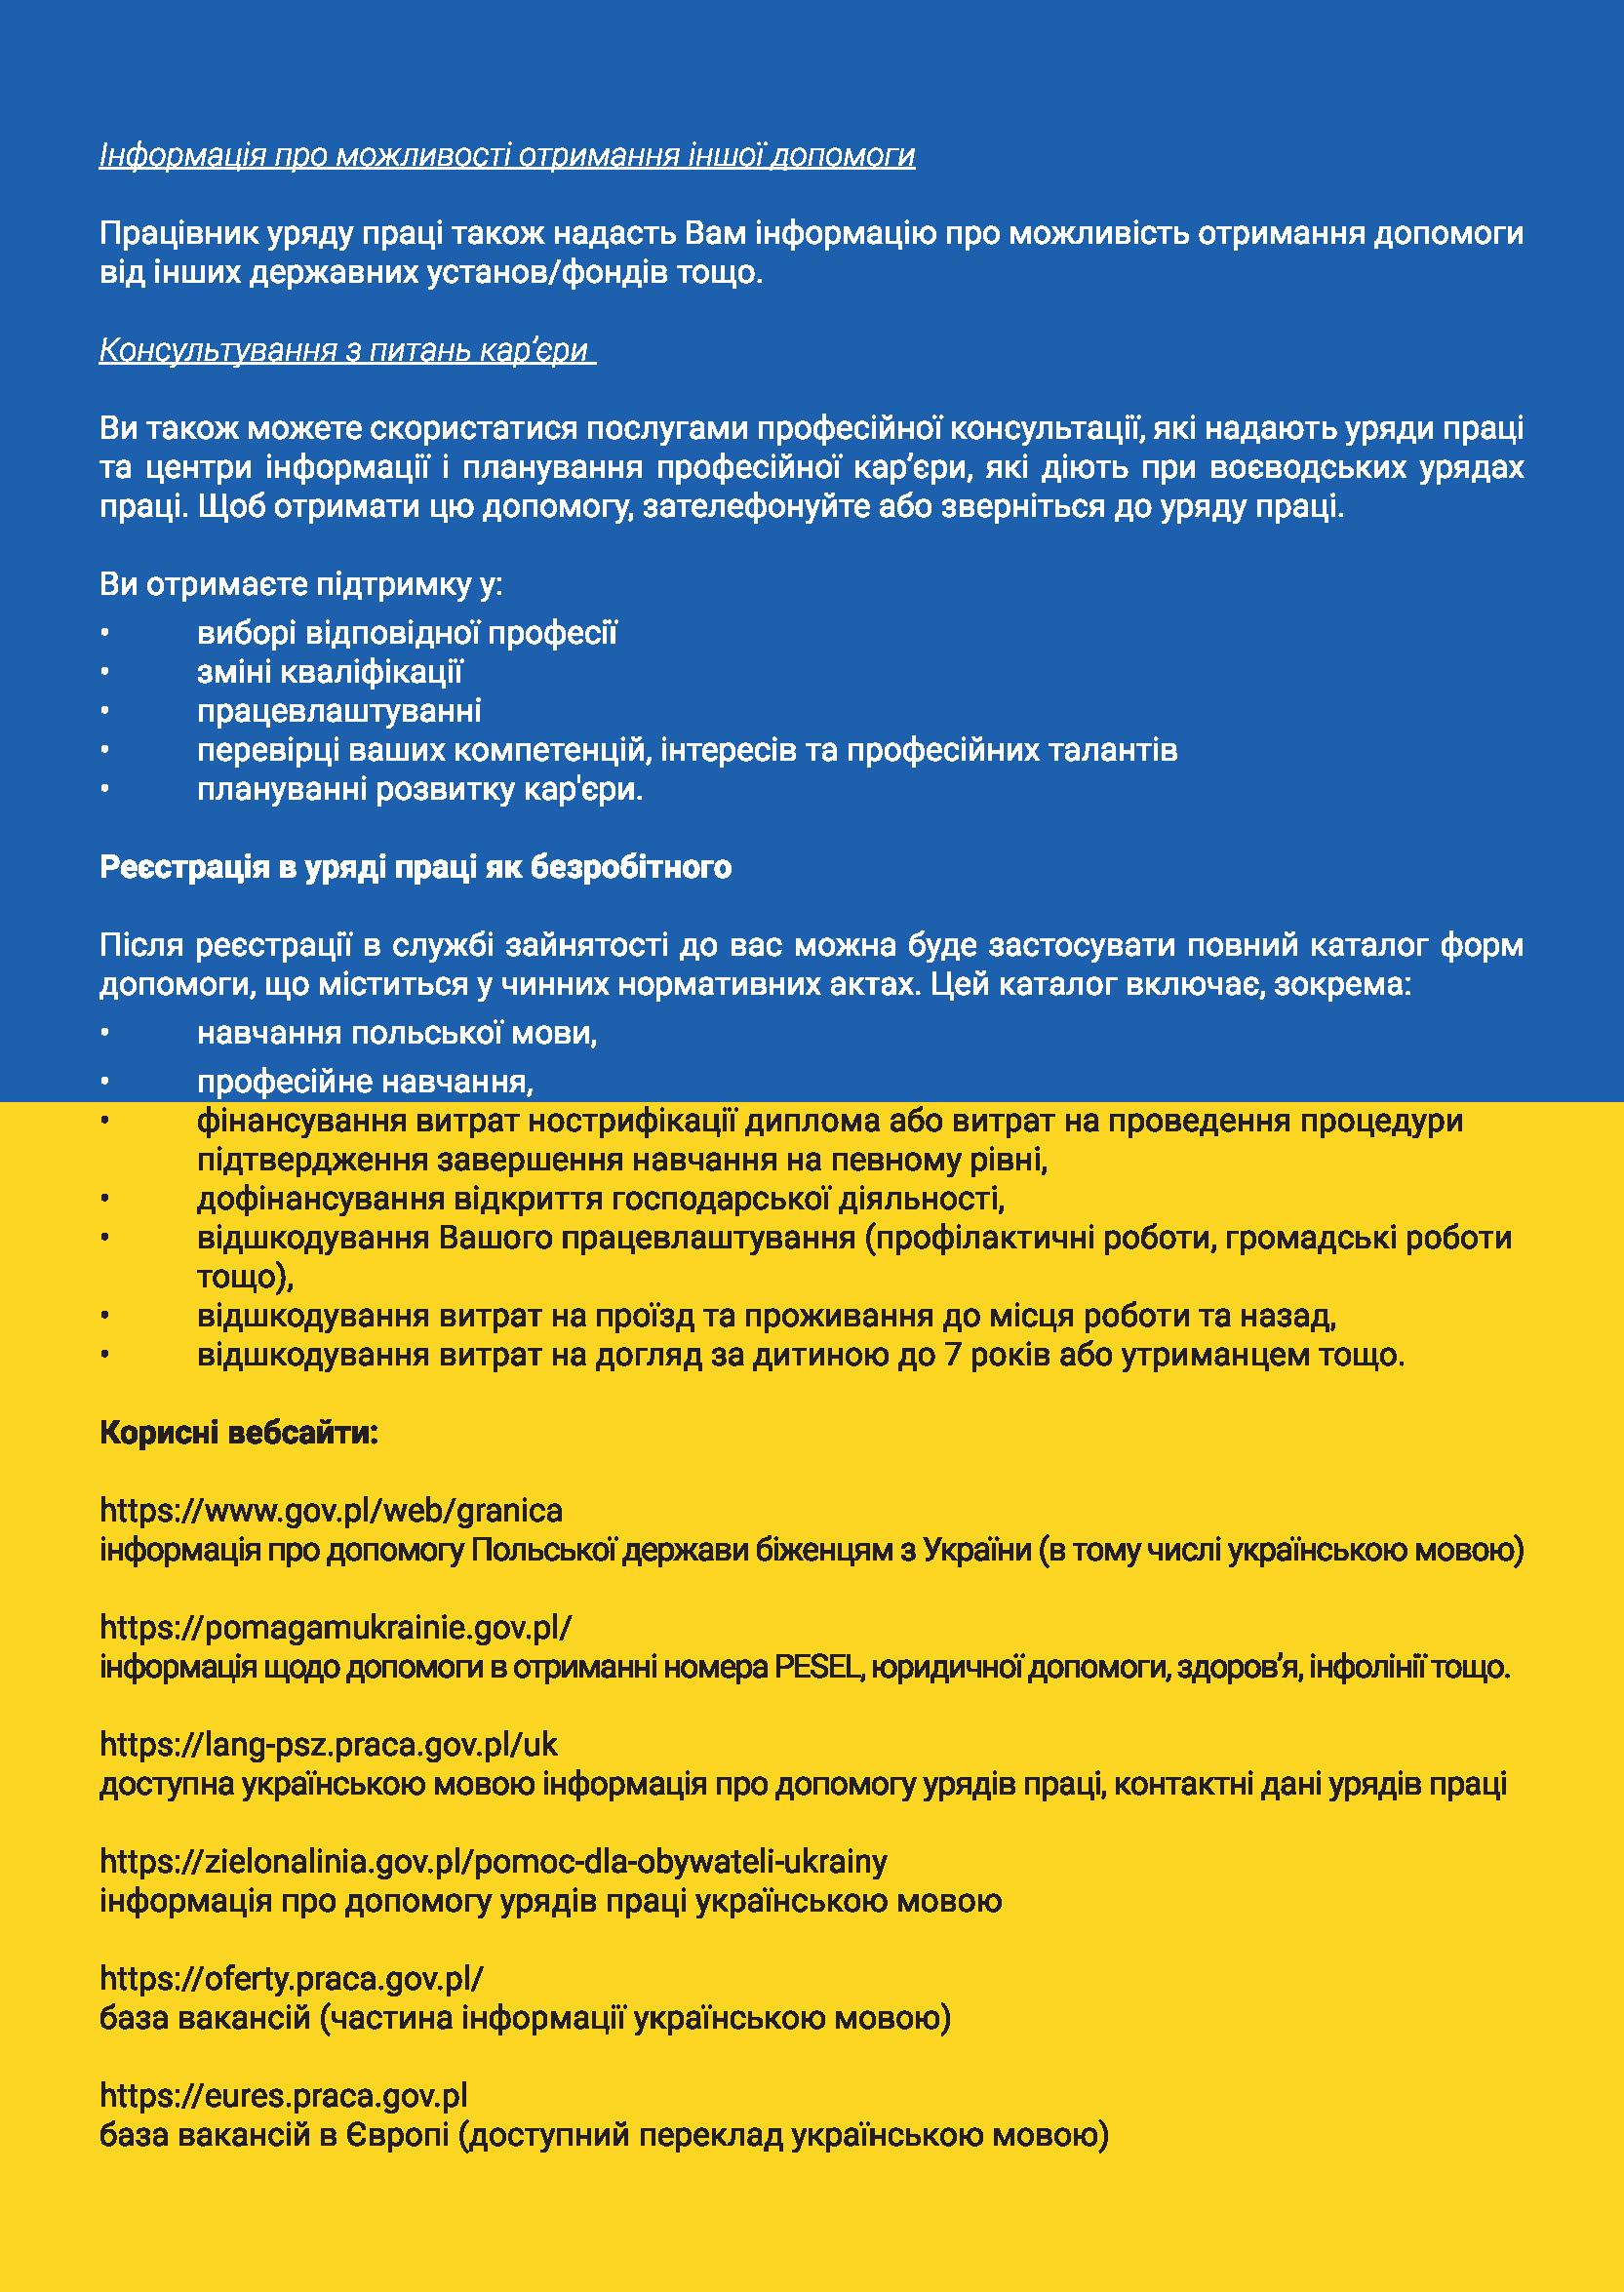 Ulotka UA Pomoc dla obywateli Ukrainy